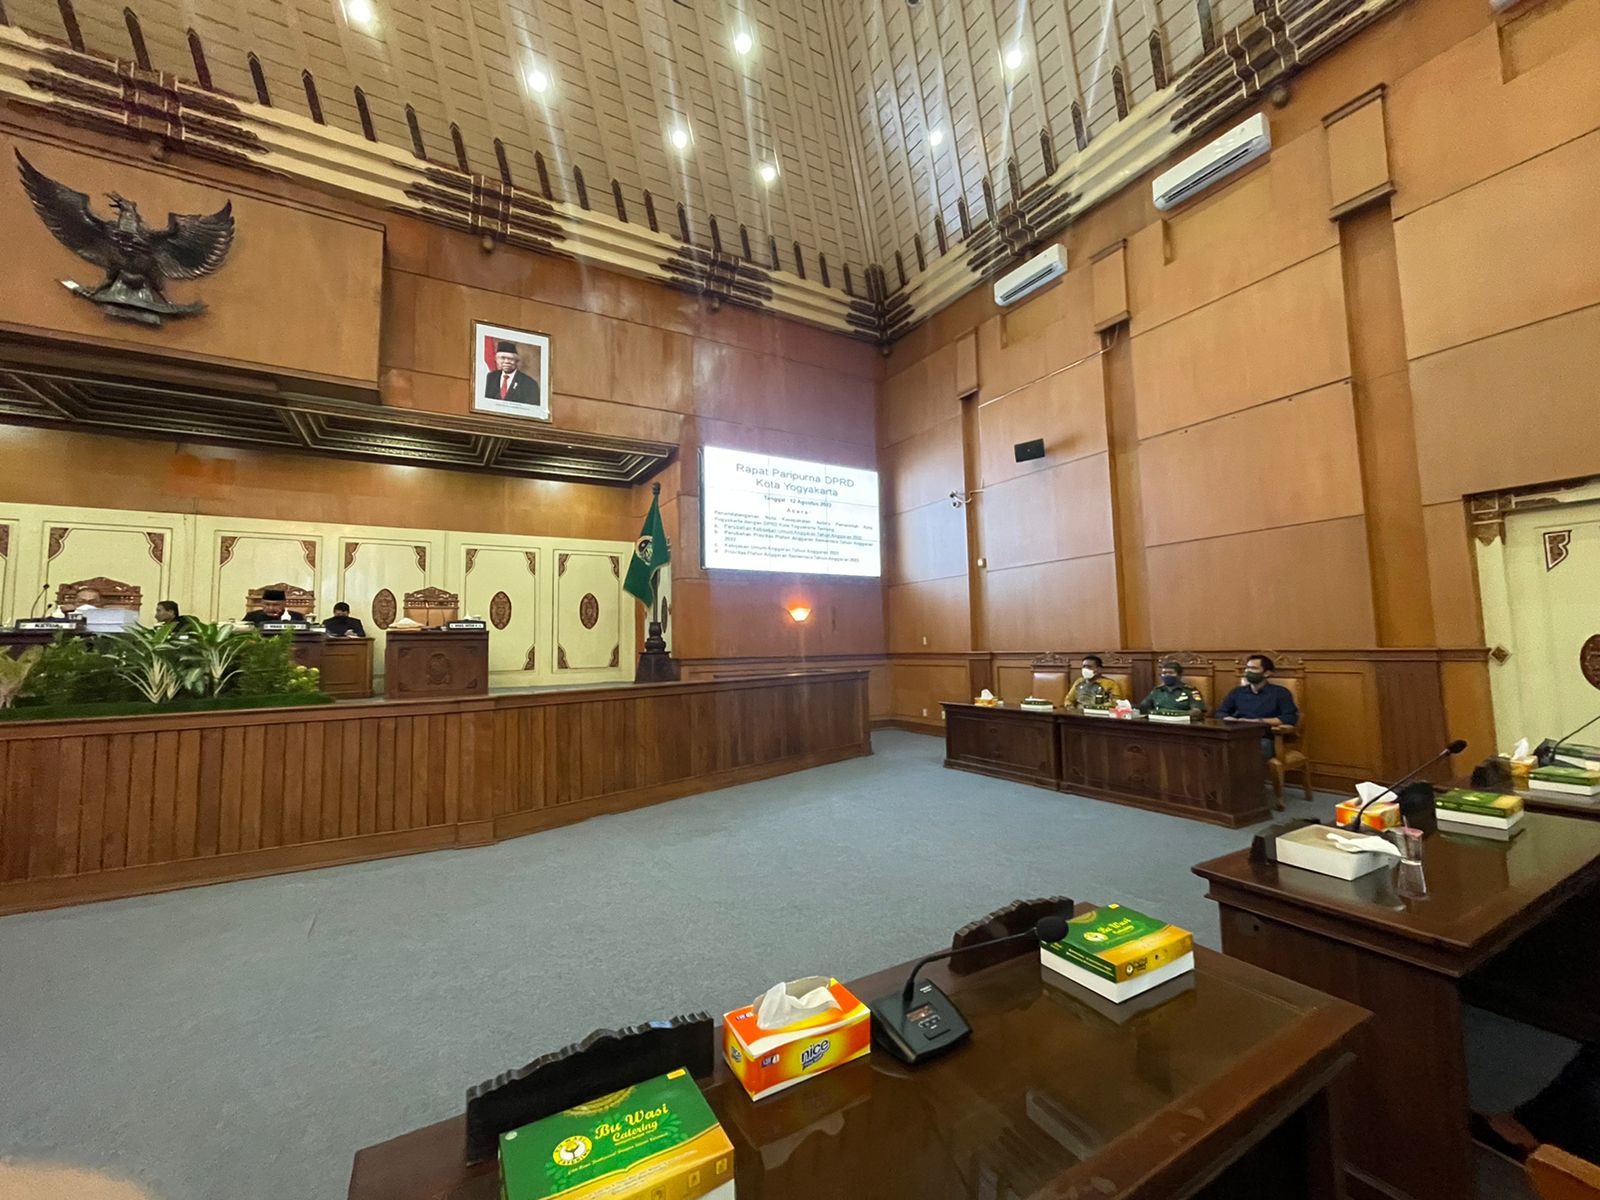 Panitera Muda Hukum Menghadiri Rapat Paripurna DPRD Kota Yogyakarta